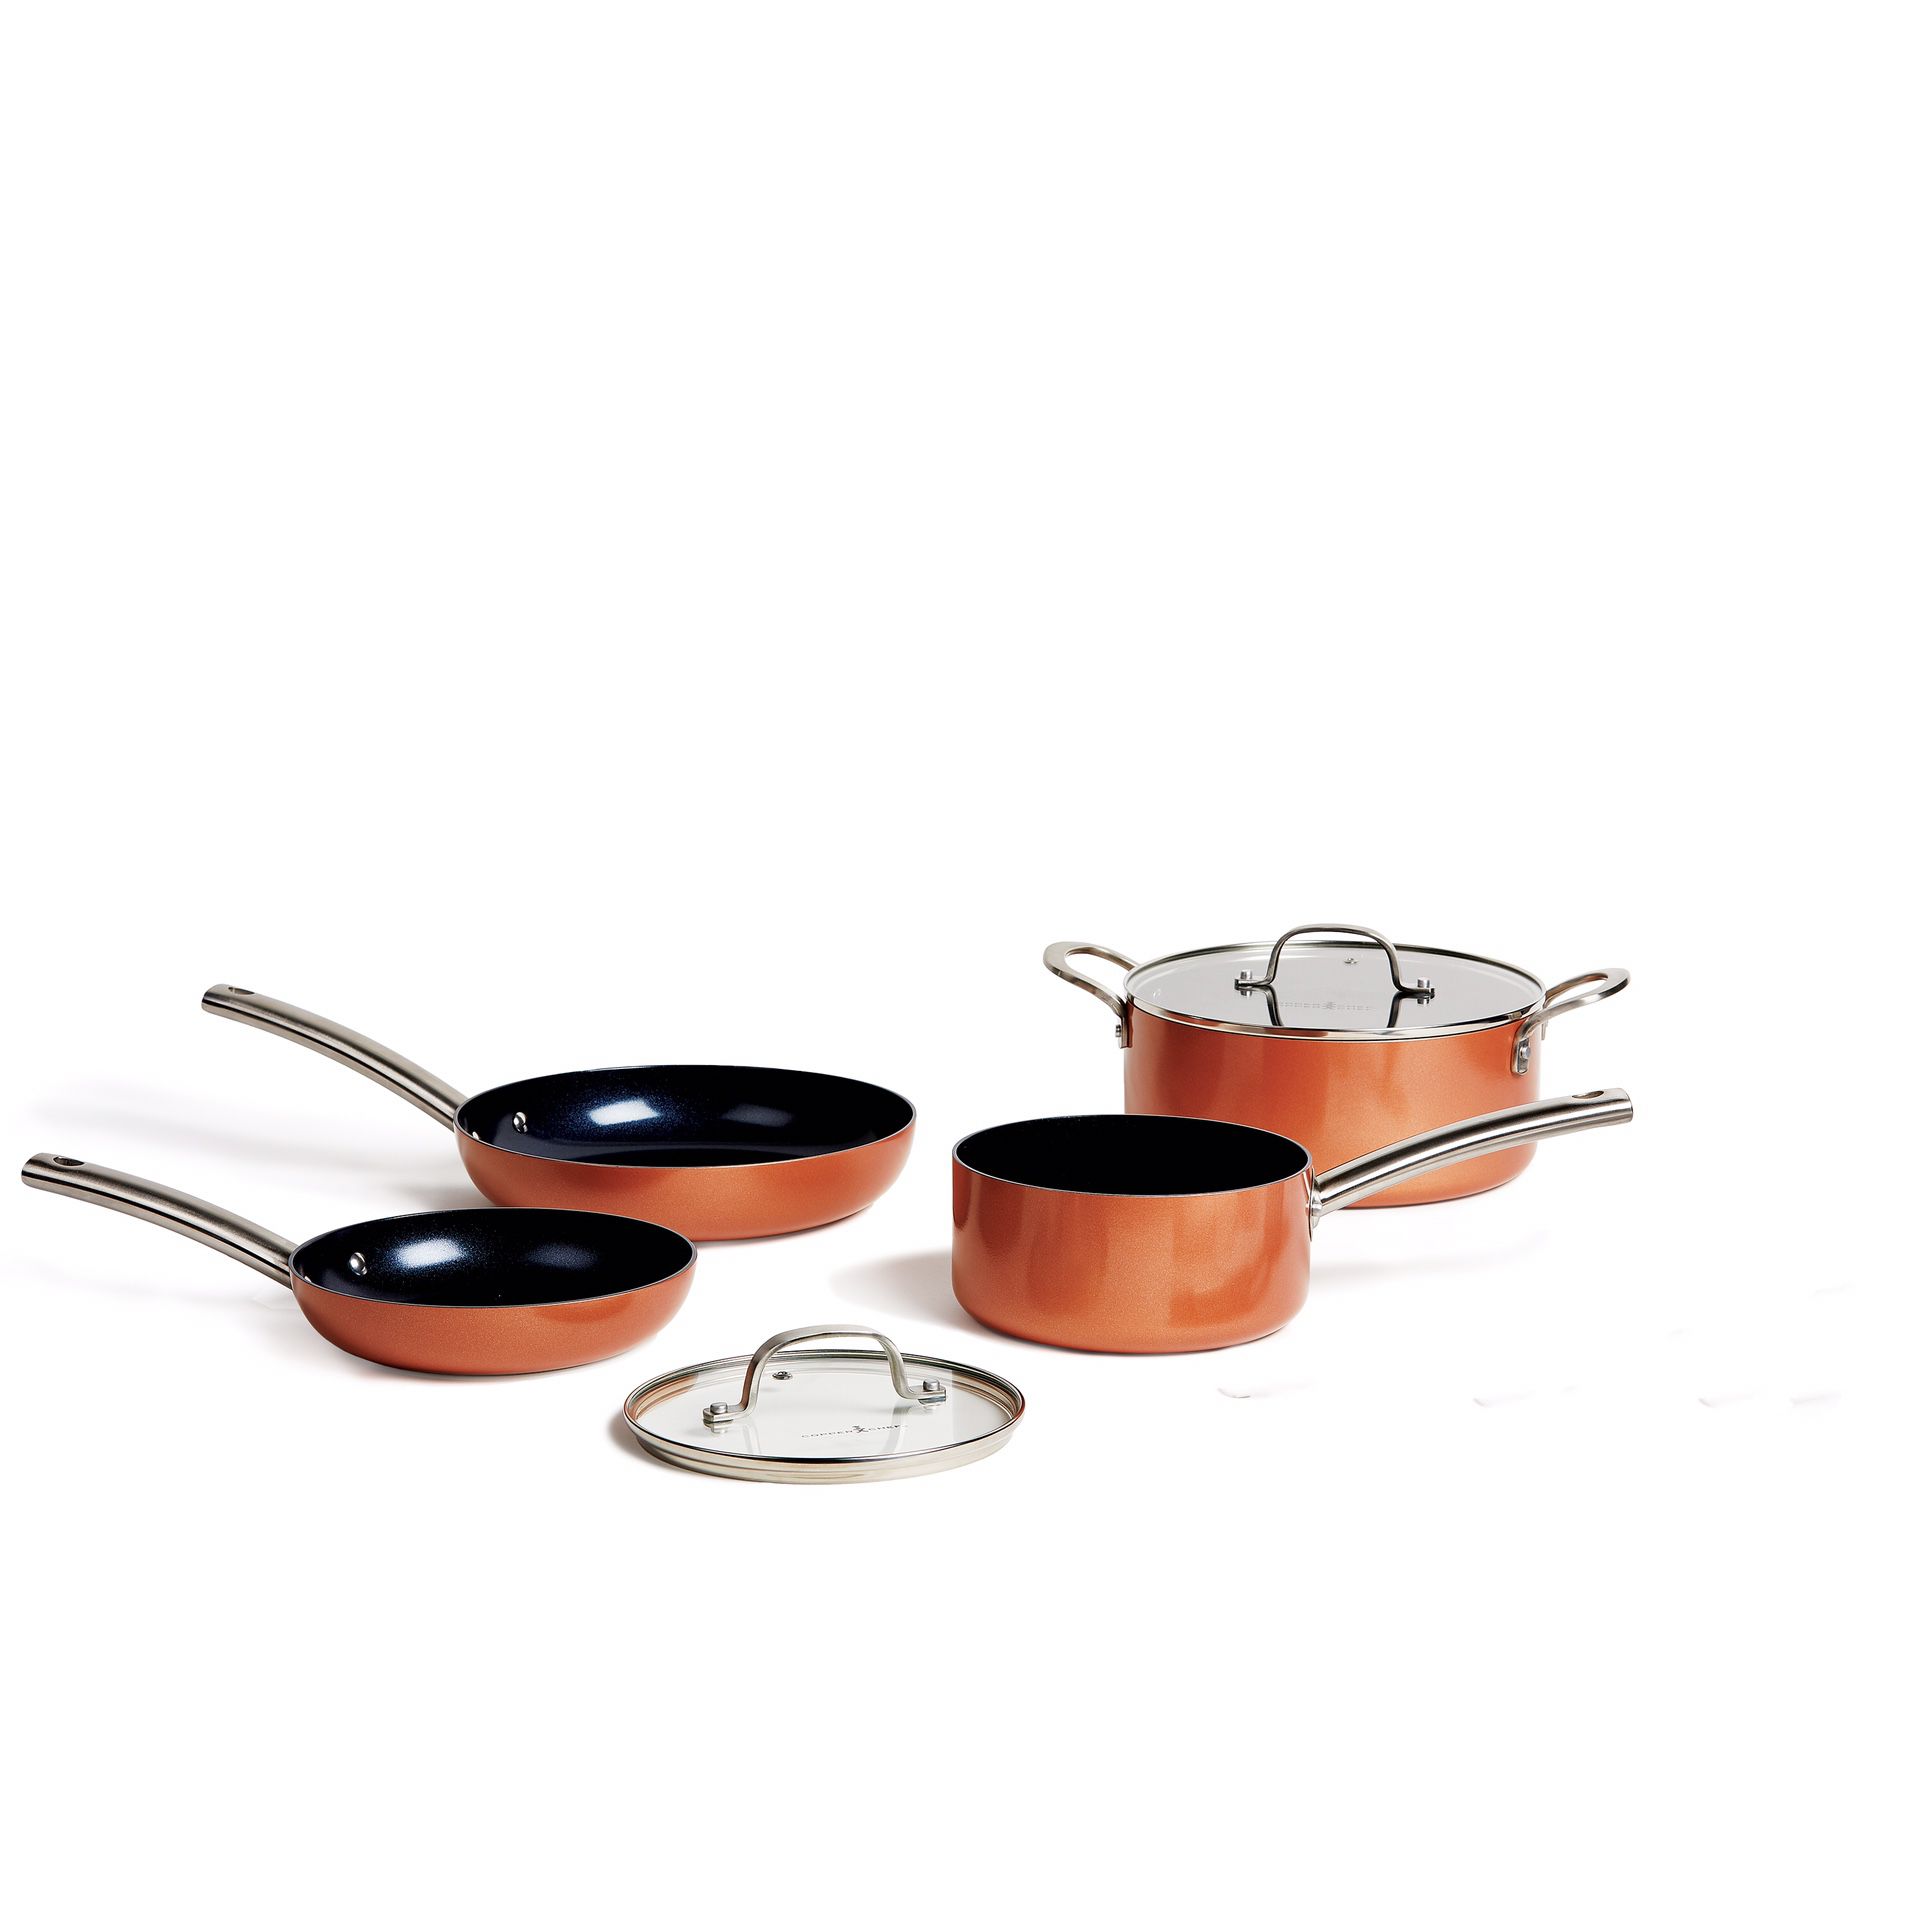 NEW UNUSED - Fry Pan, Source Pan & Casserole Pot 6pcs Set - Free Gift w/purchase